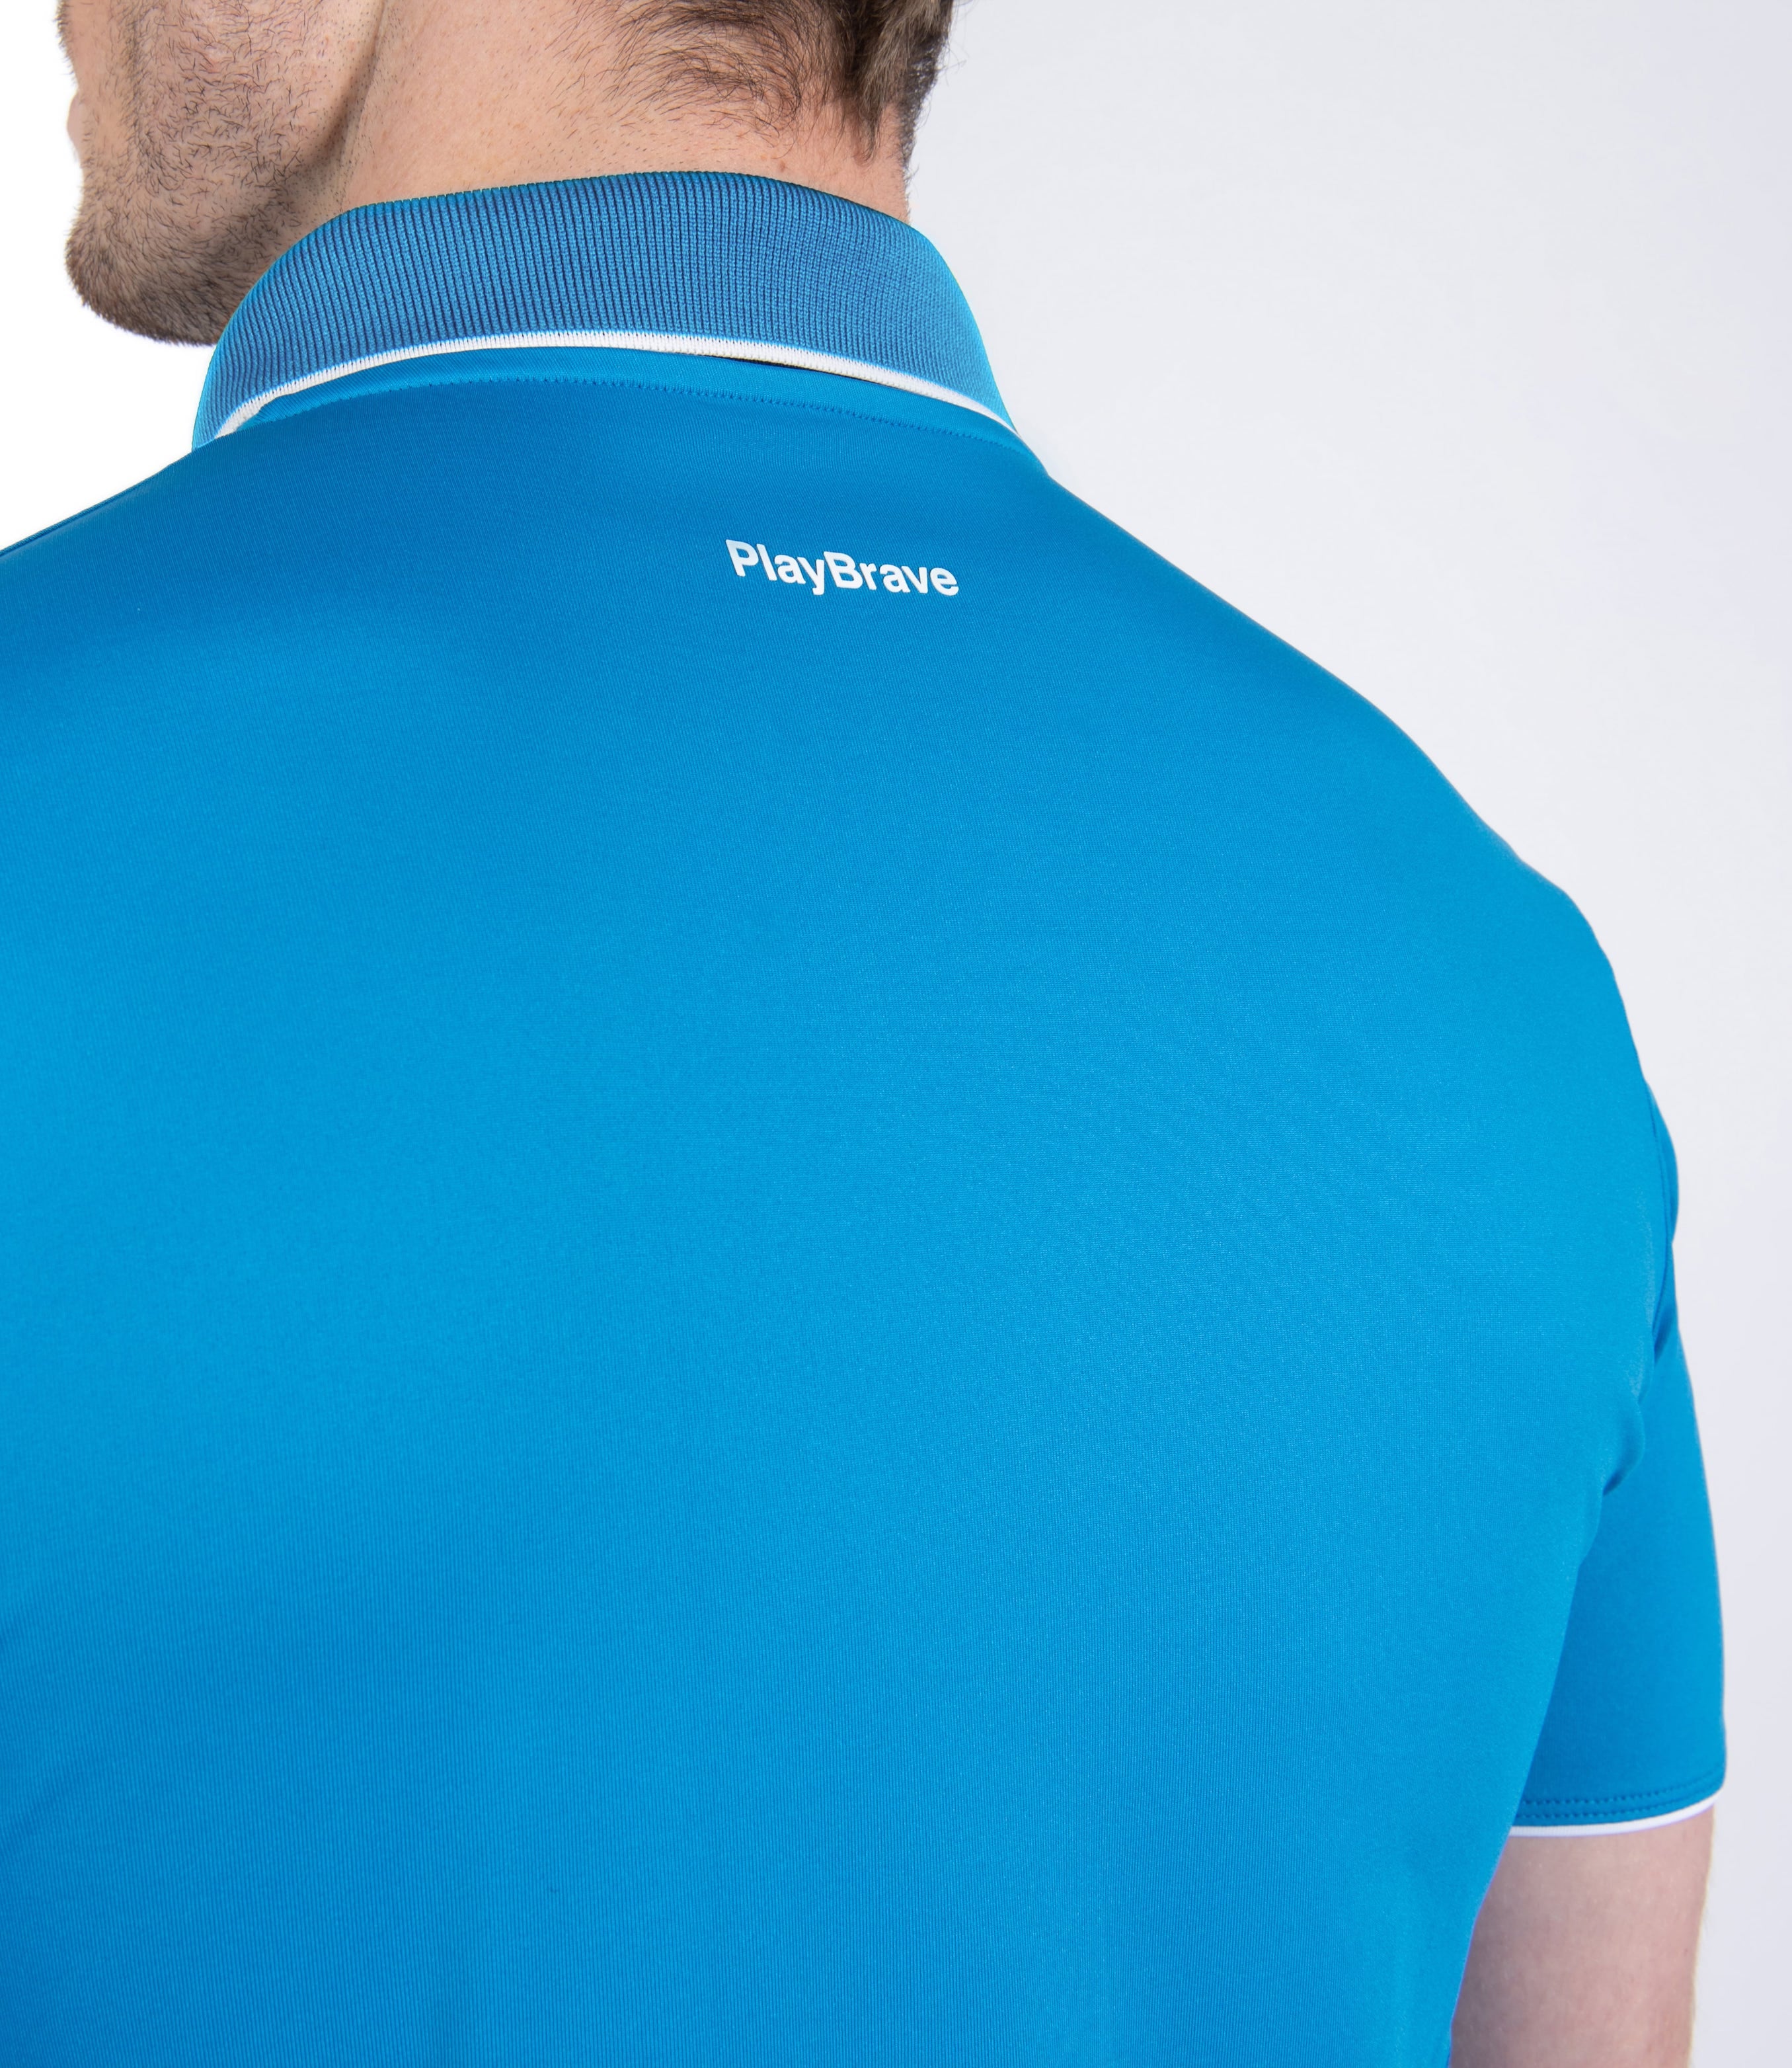 Mens Tenniswear-Men's Tops-PlayBrave-William Polo - Brilliant Blue/White-PlayBrave Sports